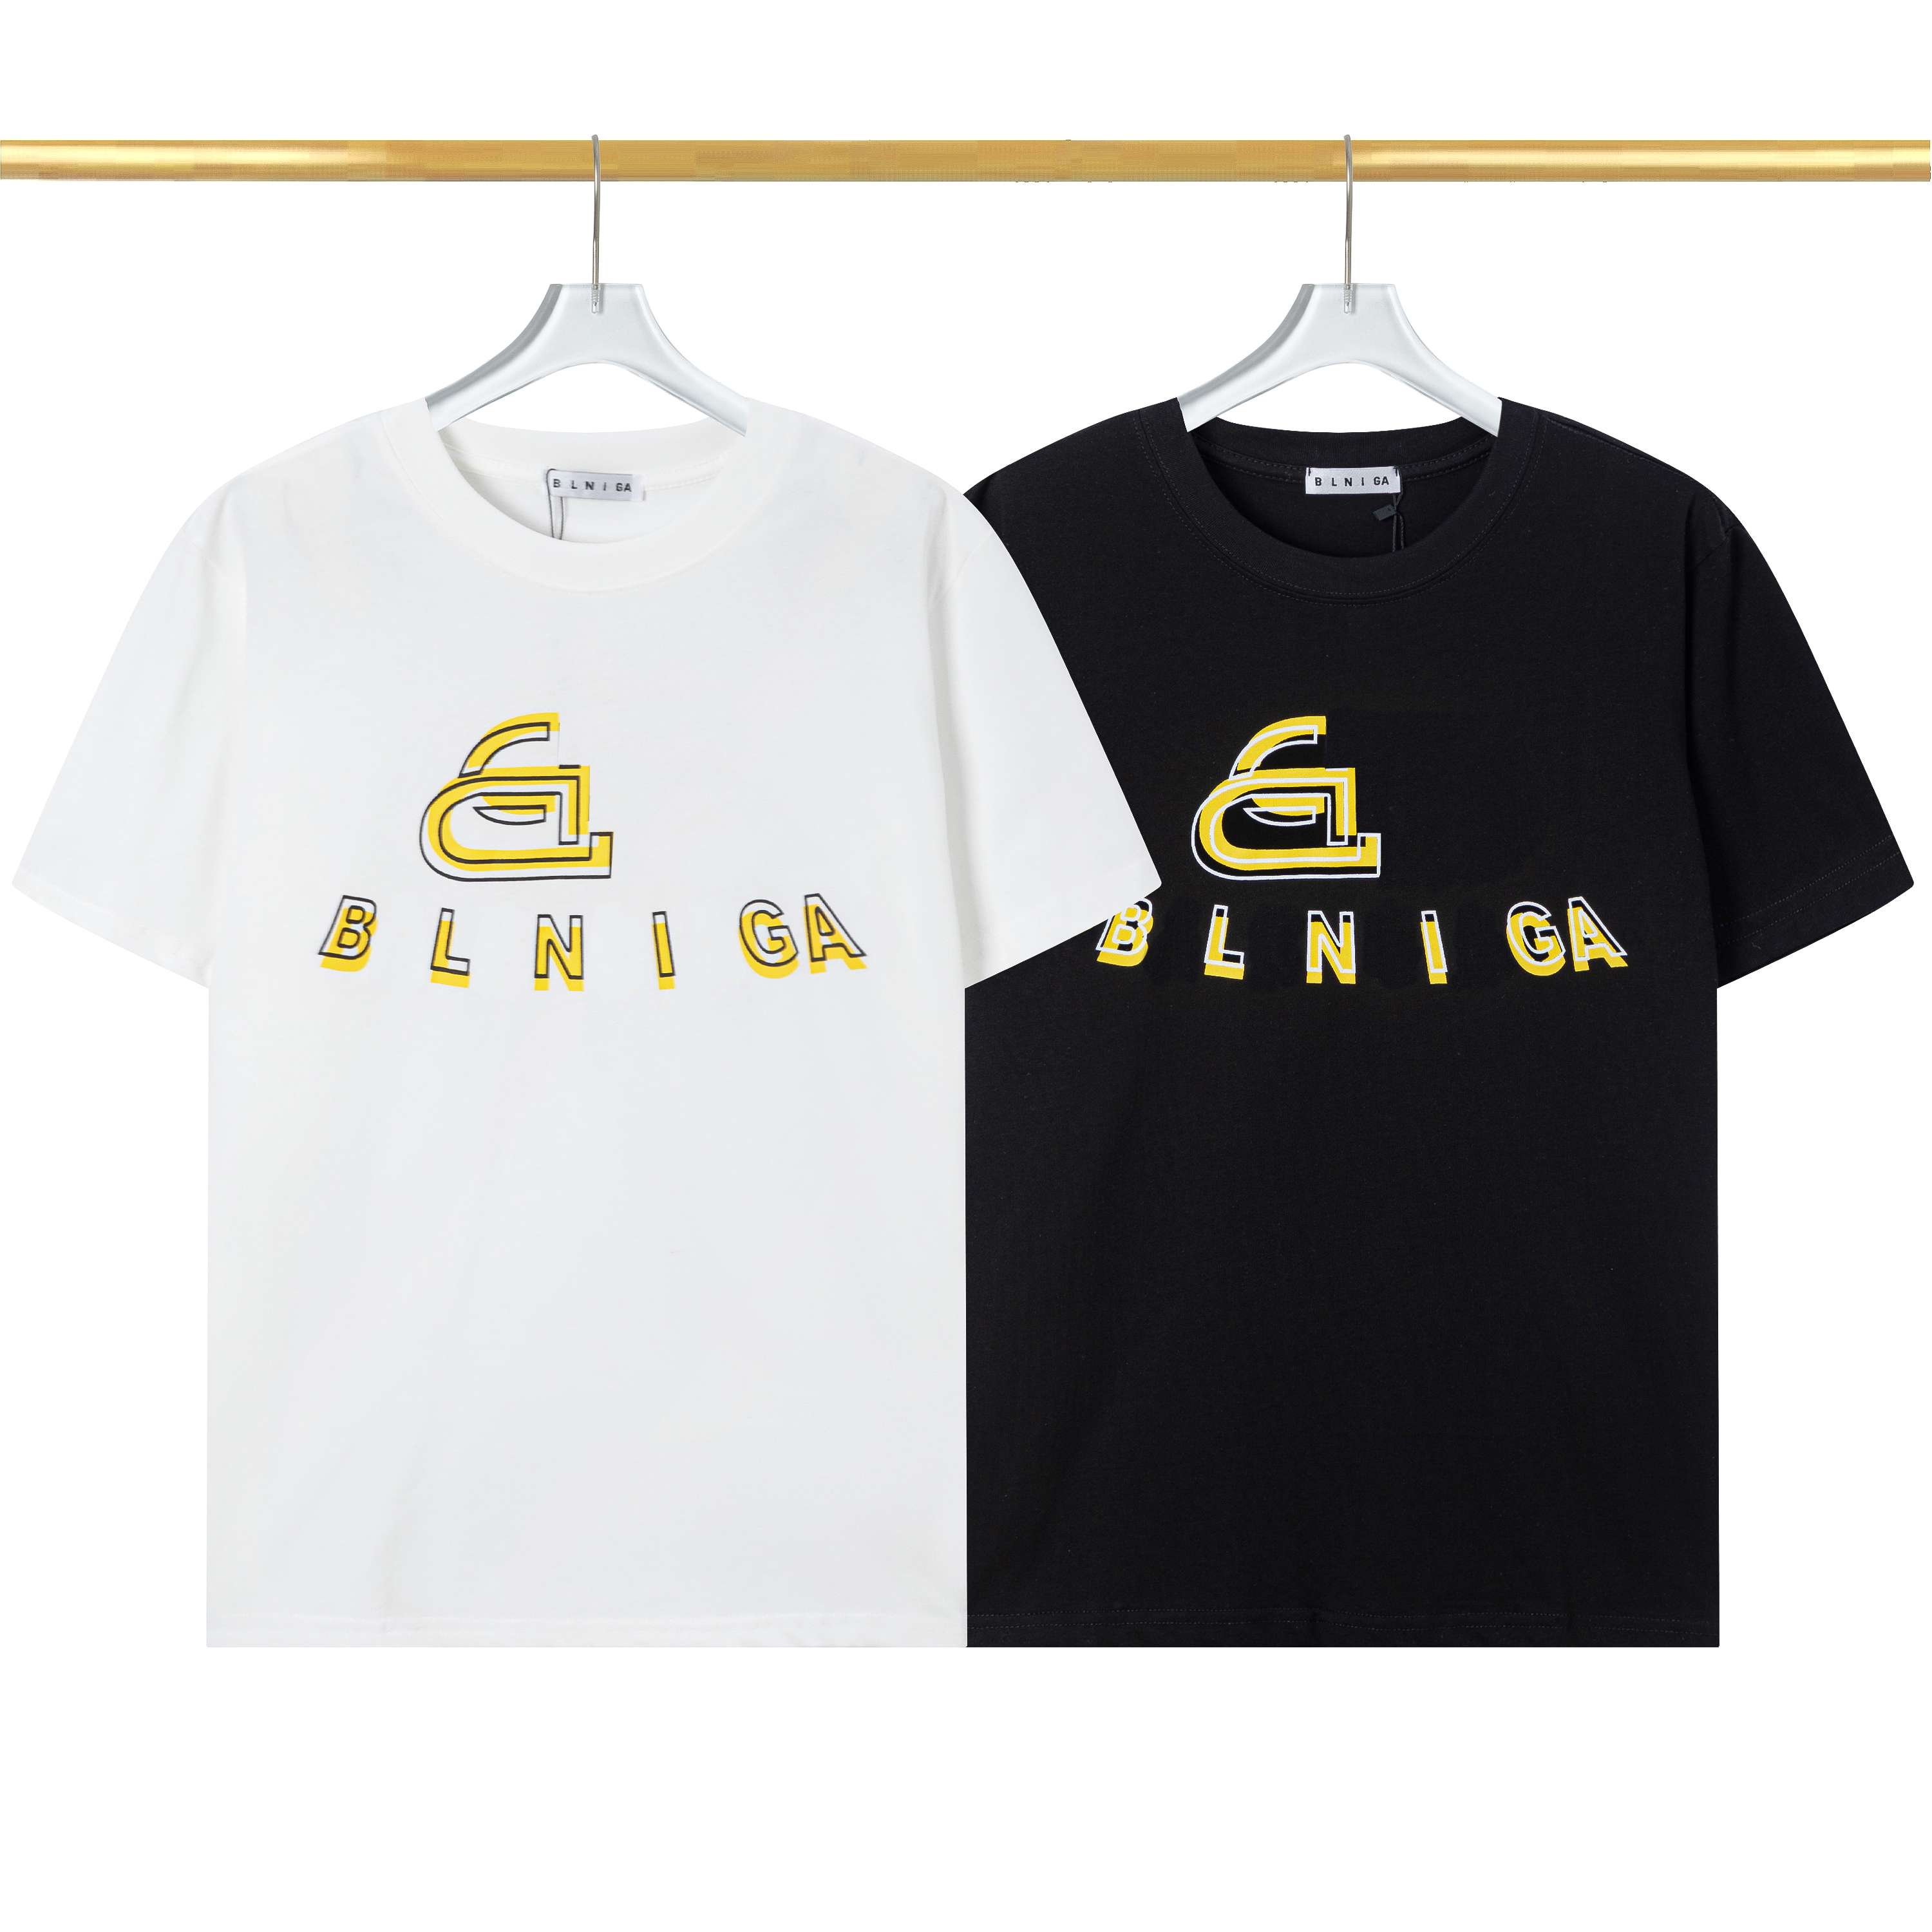 Cotton Men 's Be All-Match New Black White 인쇄 편지 여름 캐주얼 한 느슨한 짧은 소매 새로운 최고의 컬러 티셔츠